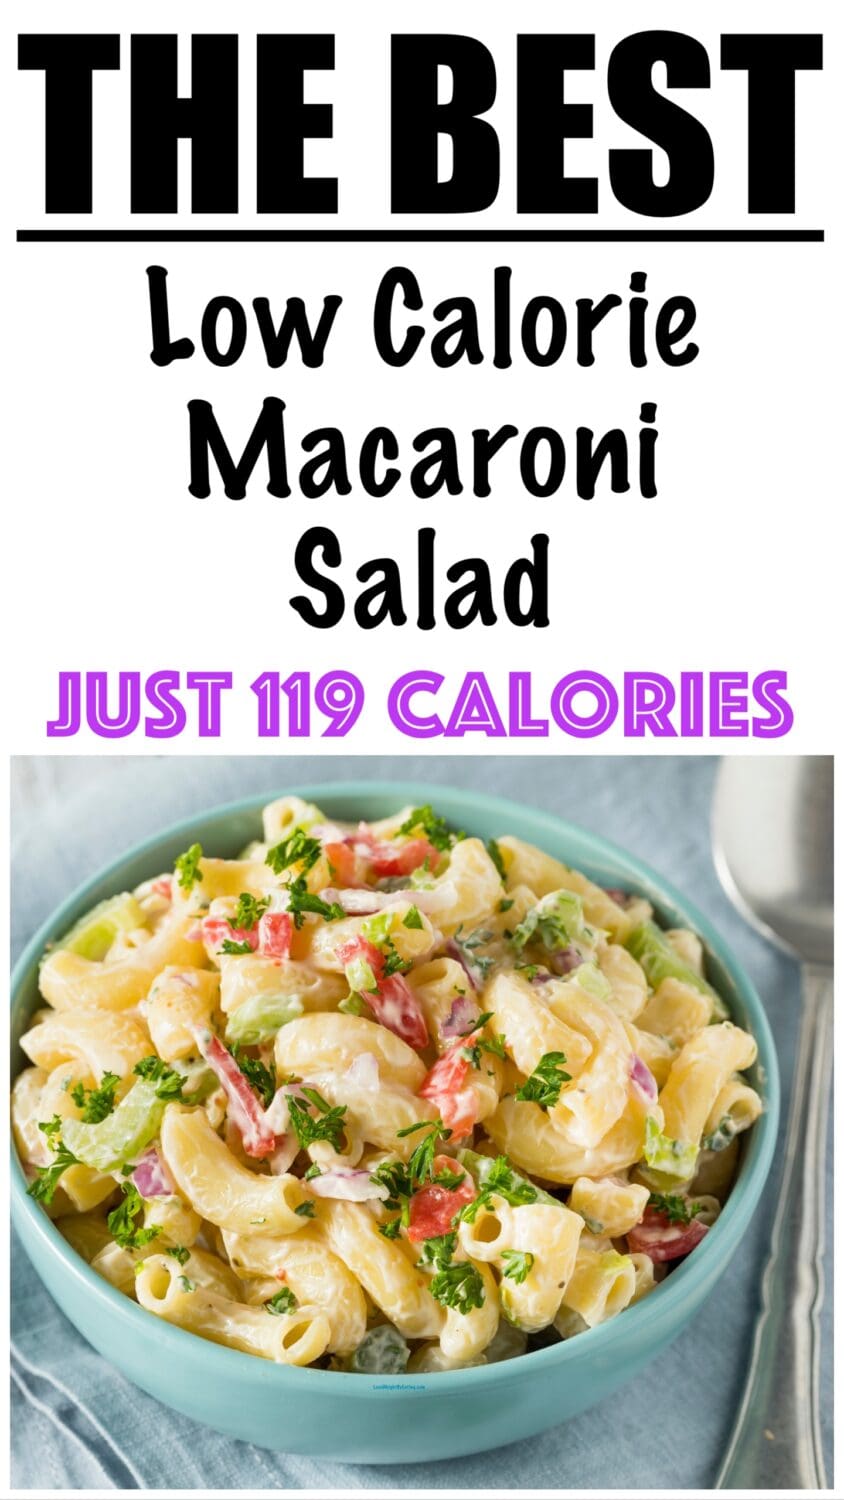 Low Calorie Macaroni Salad